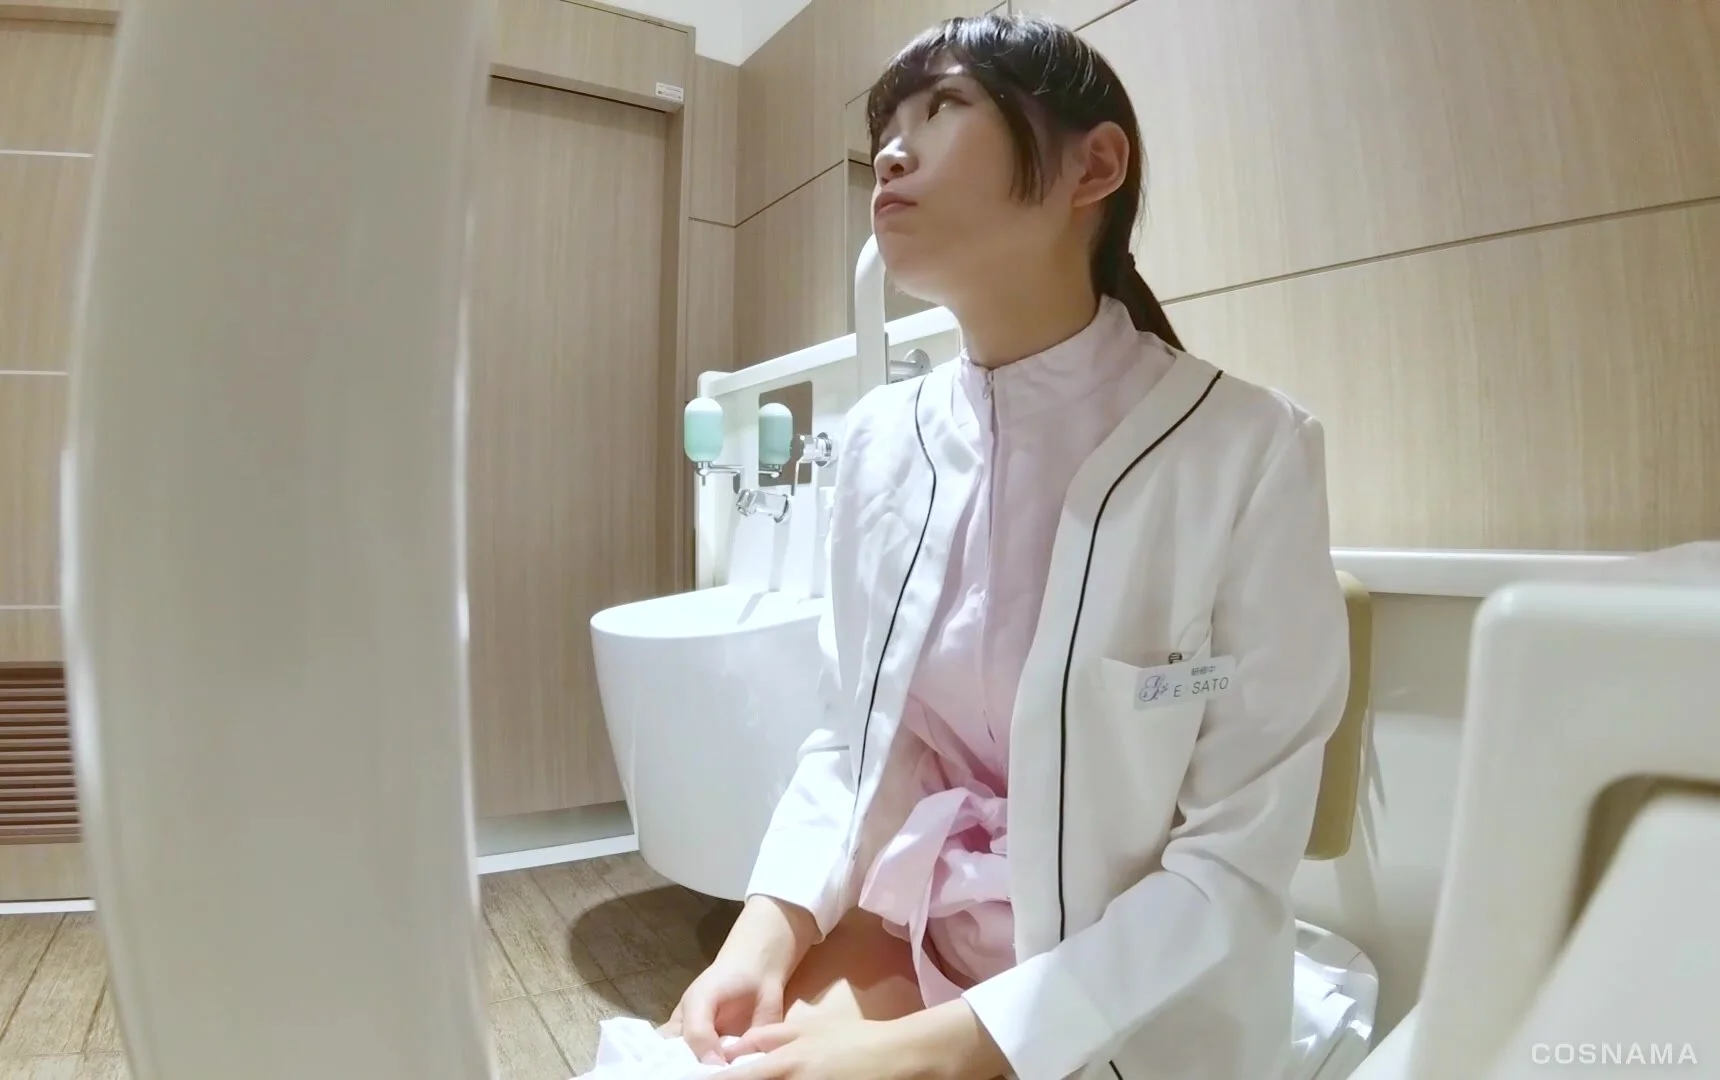 Nurse bathroom